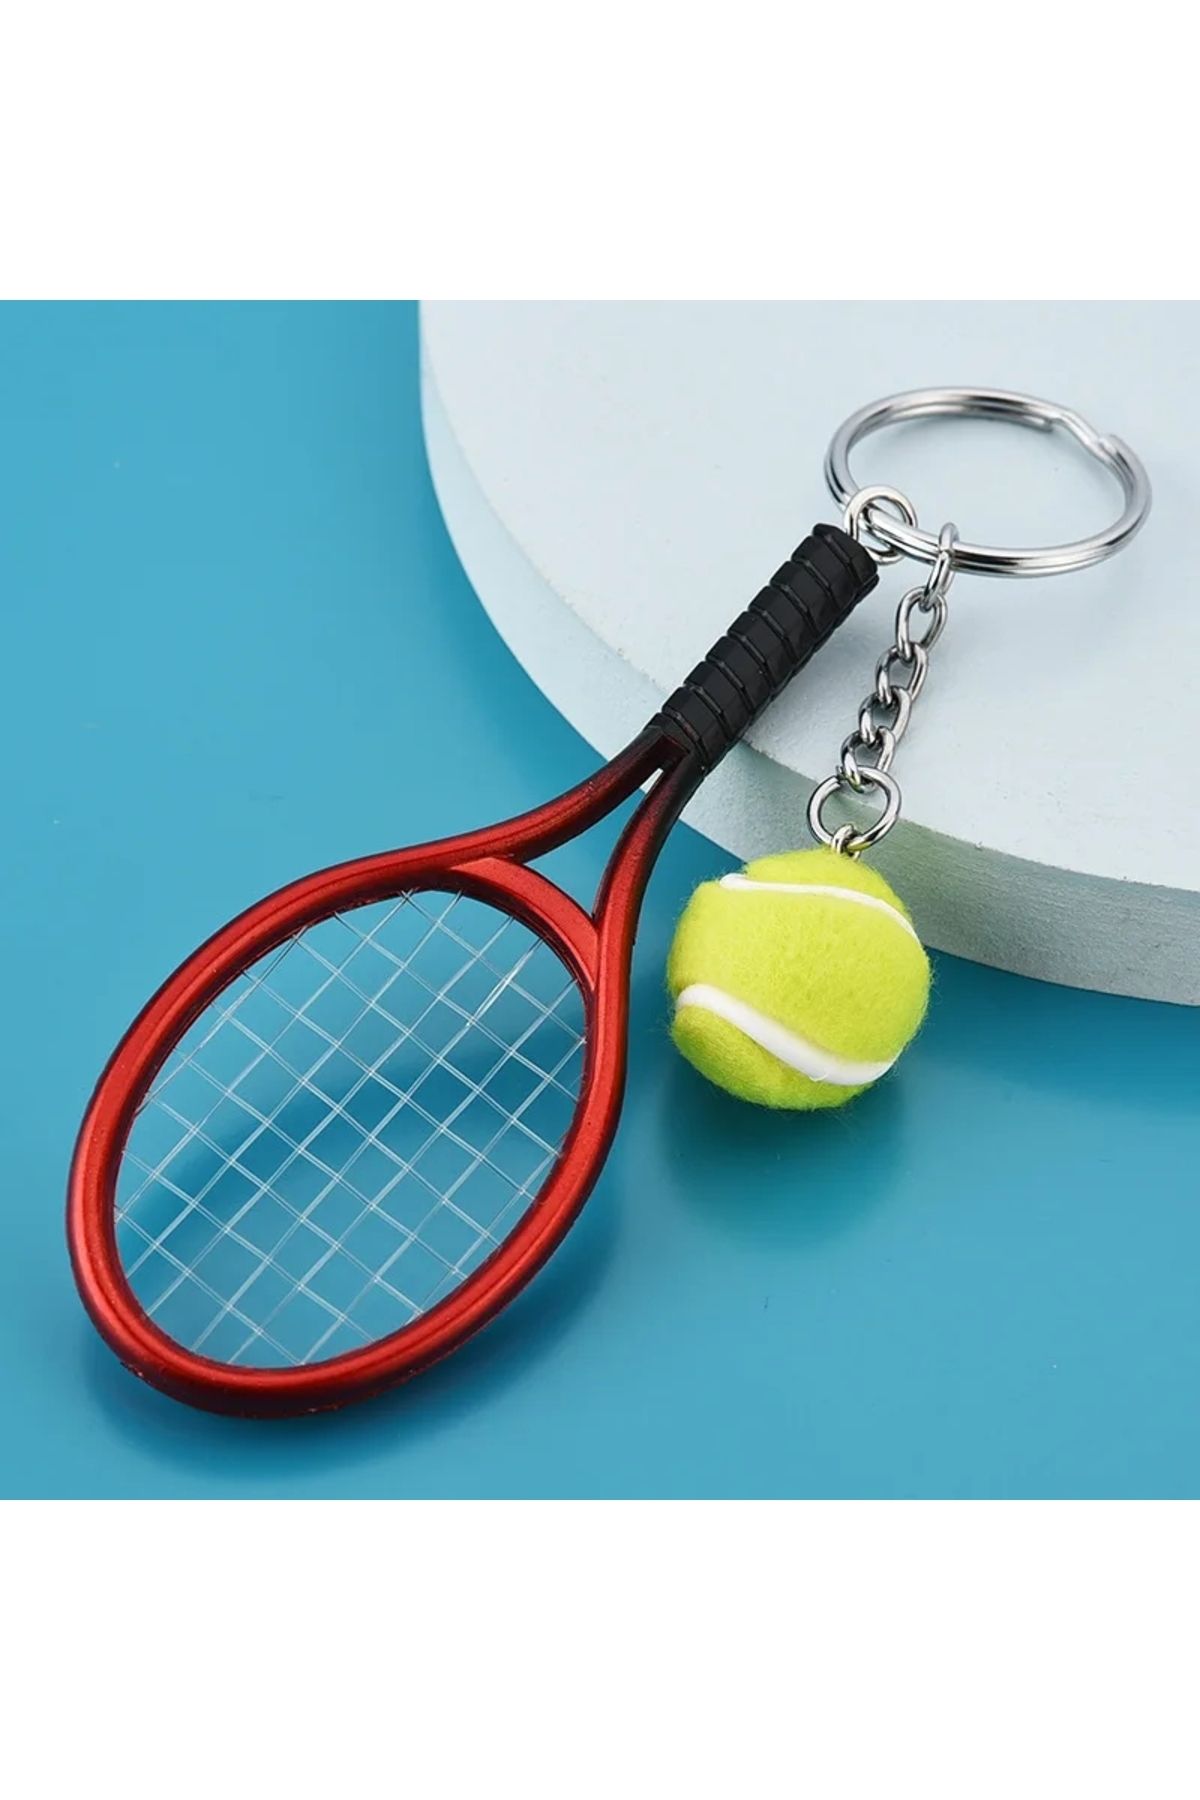 AYCANSTORE Tenis Raketi ve Tenis Topu Anahtarlık (Kırmızı)